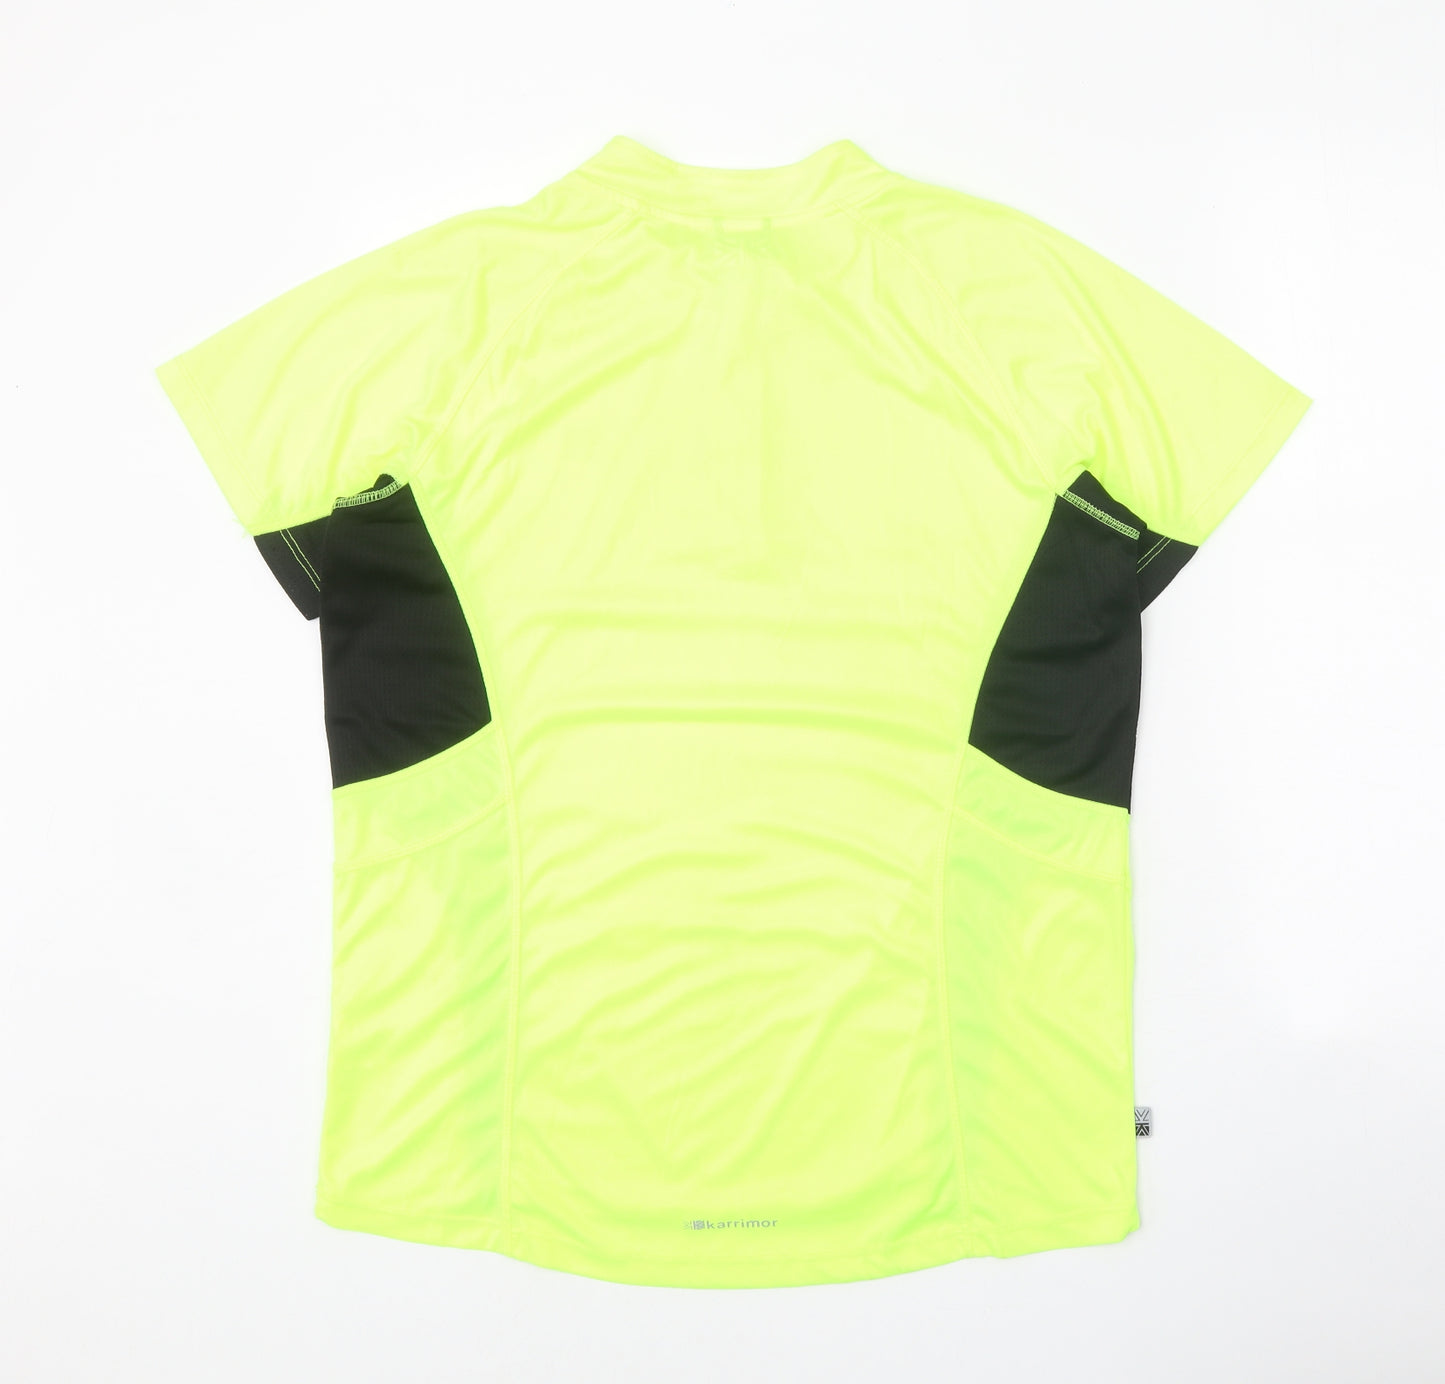 Karrimor Womens Green Polyester Basic T-Shirt Size 18 Round Neck Zip - Neon